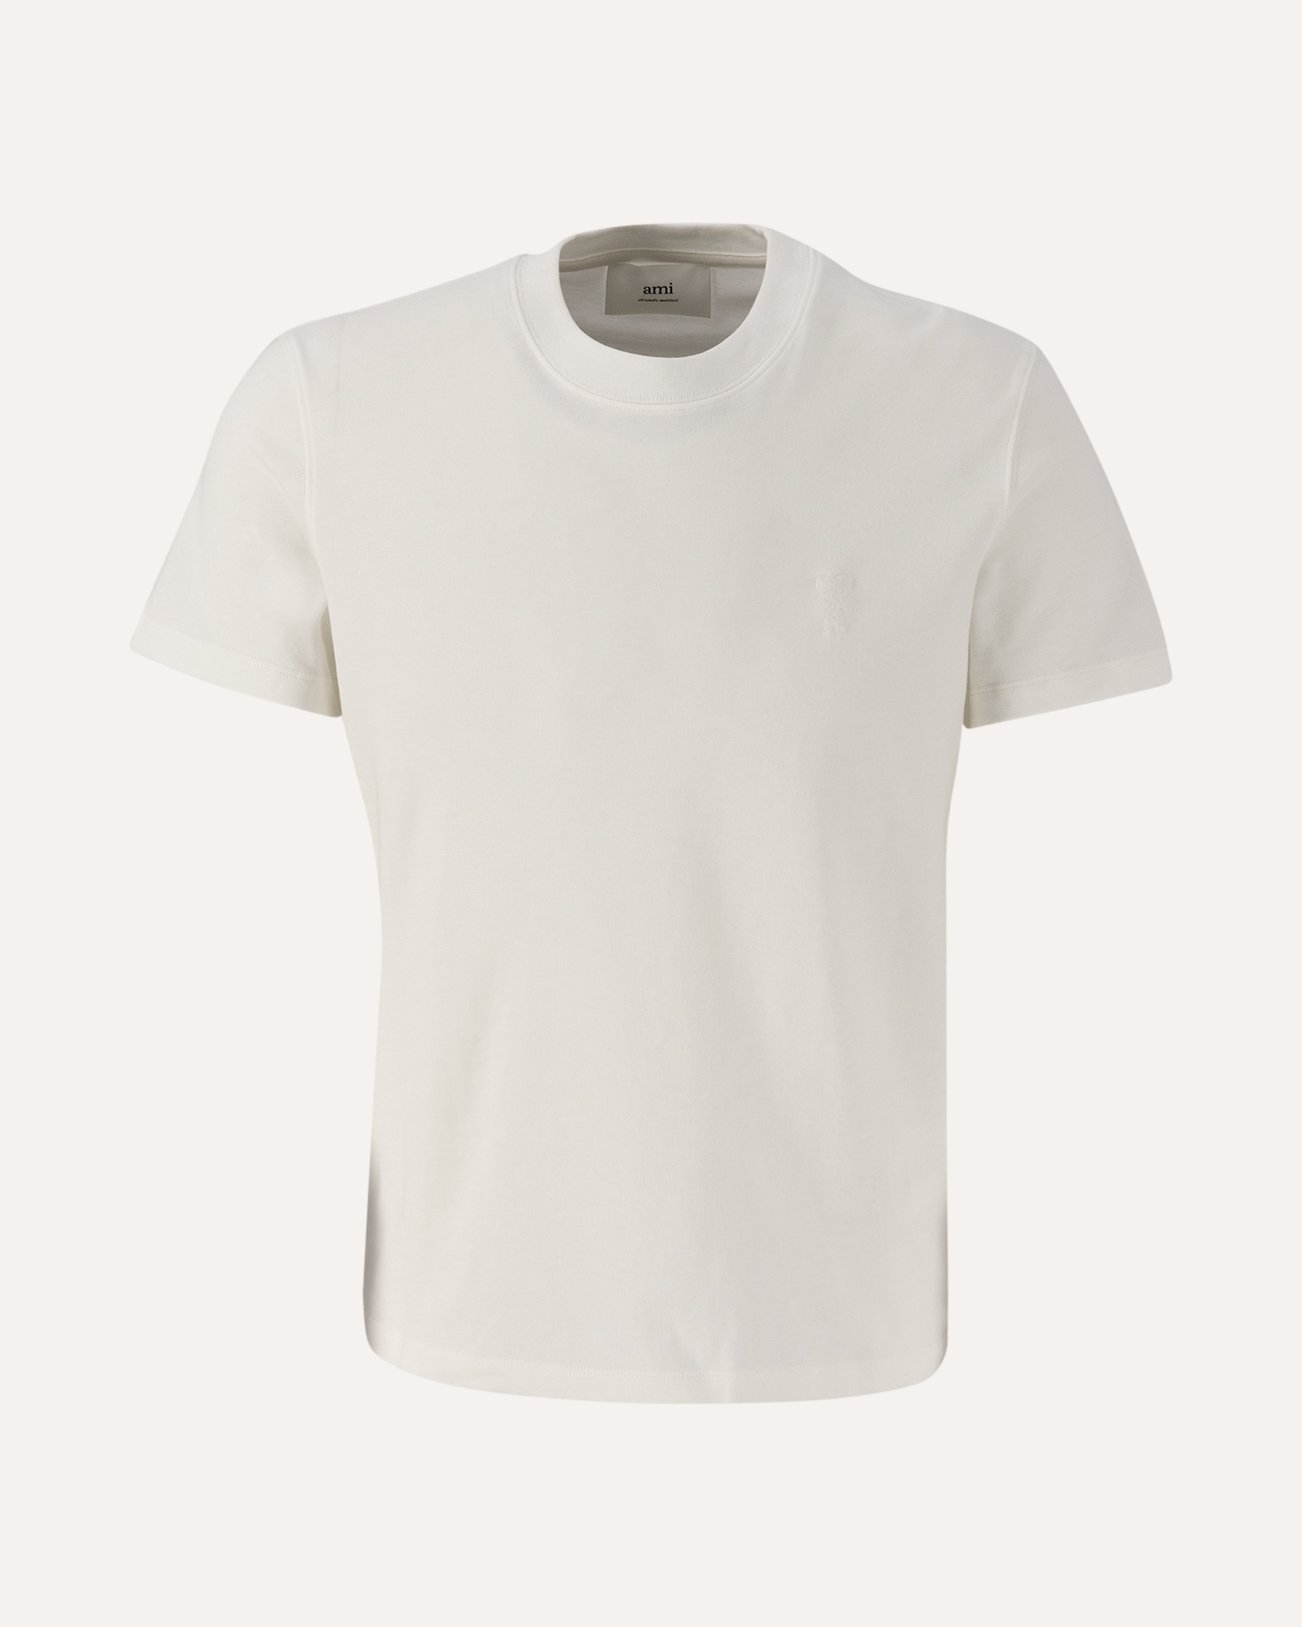 AMI Paris Tonal ADC T-shirt White 1